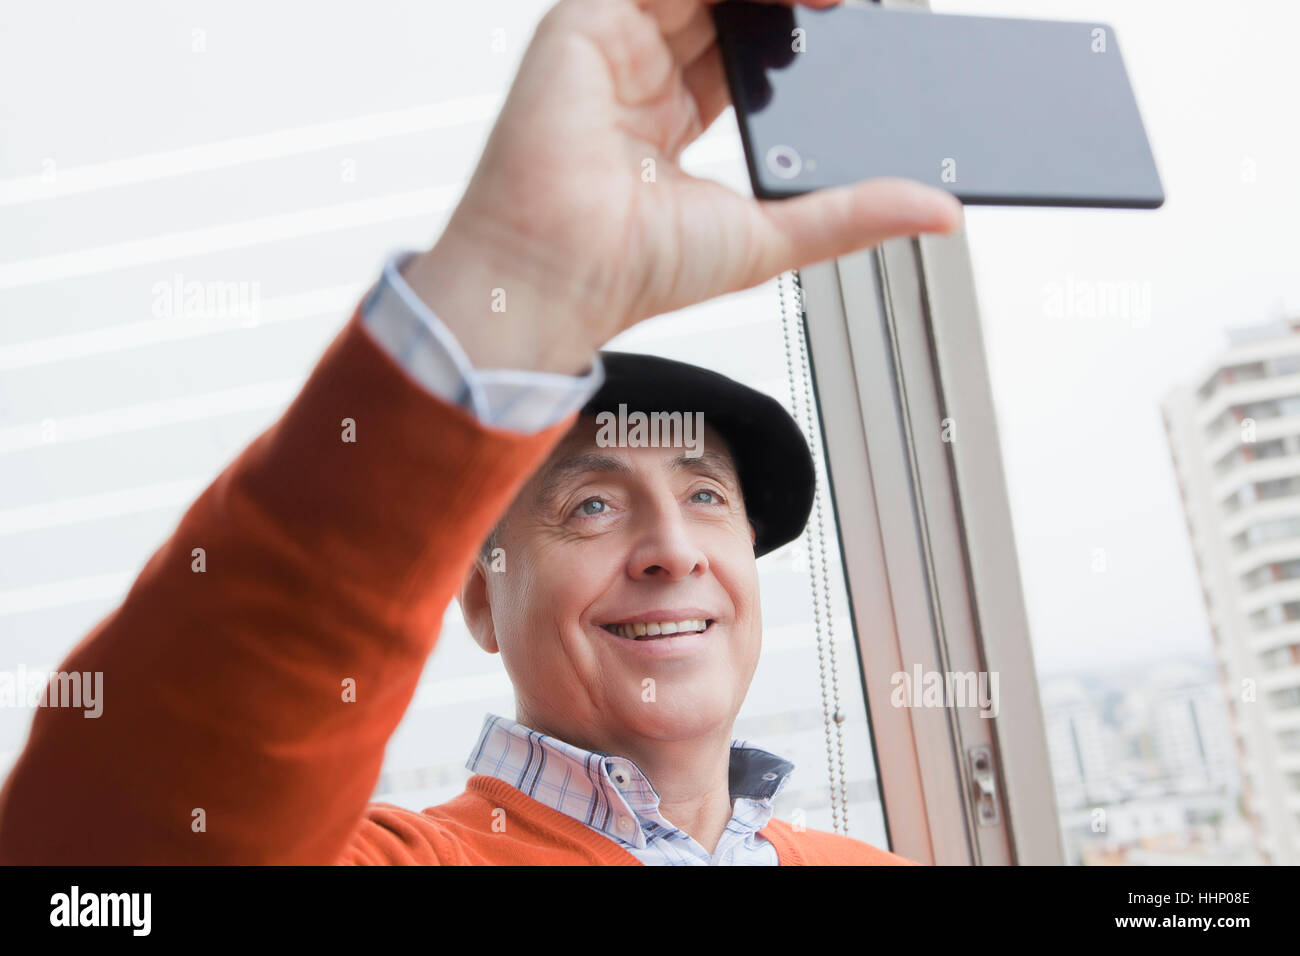 Smiling Hispanic man posing for cell phone selfie Stock Photo